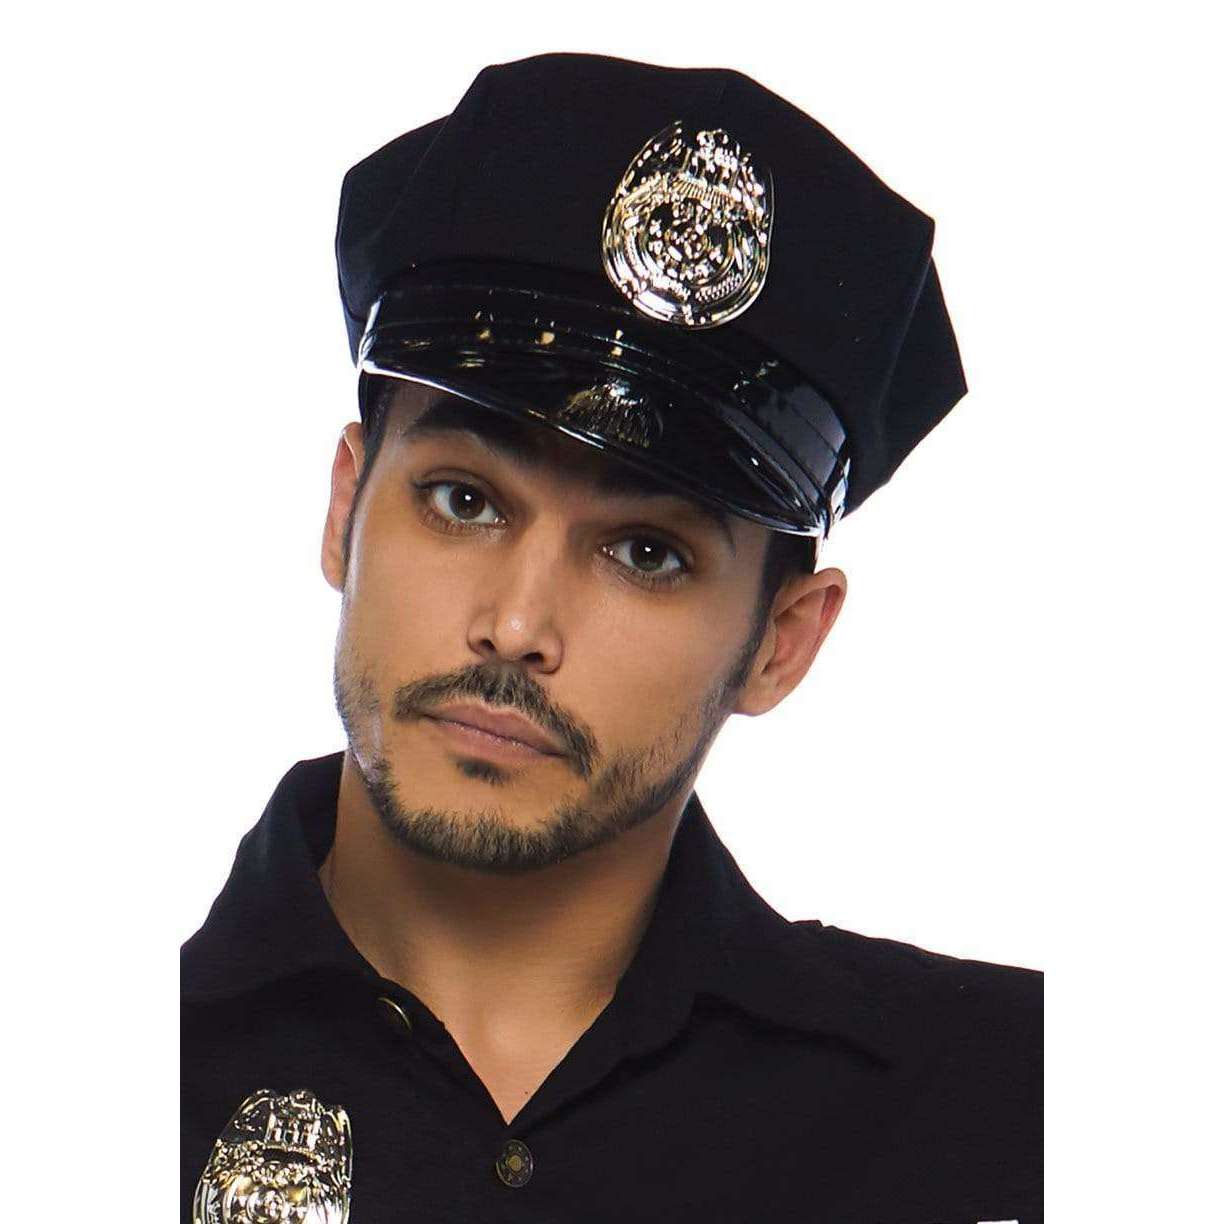 Cuff 'Em Cop Adult Police Uniform Costume